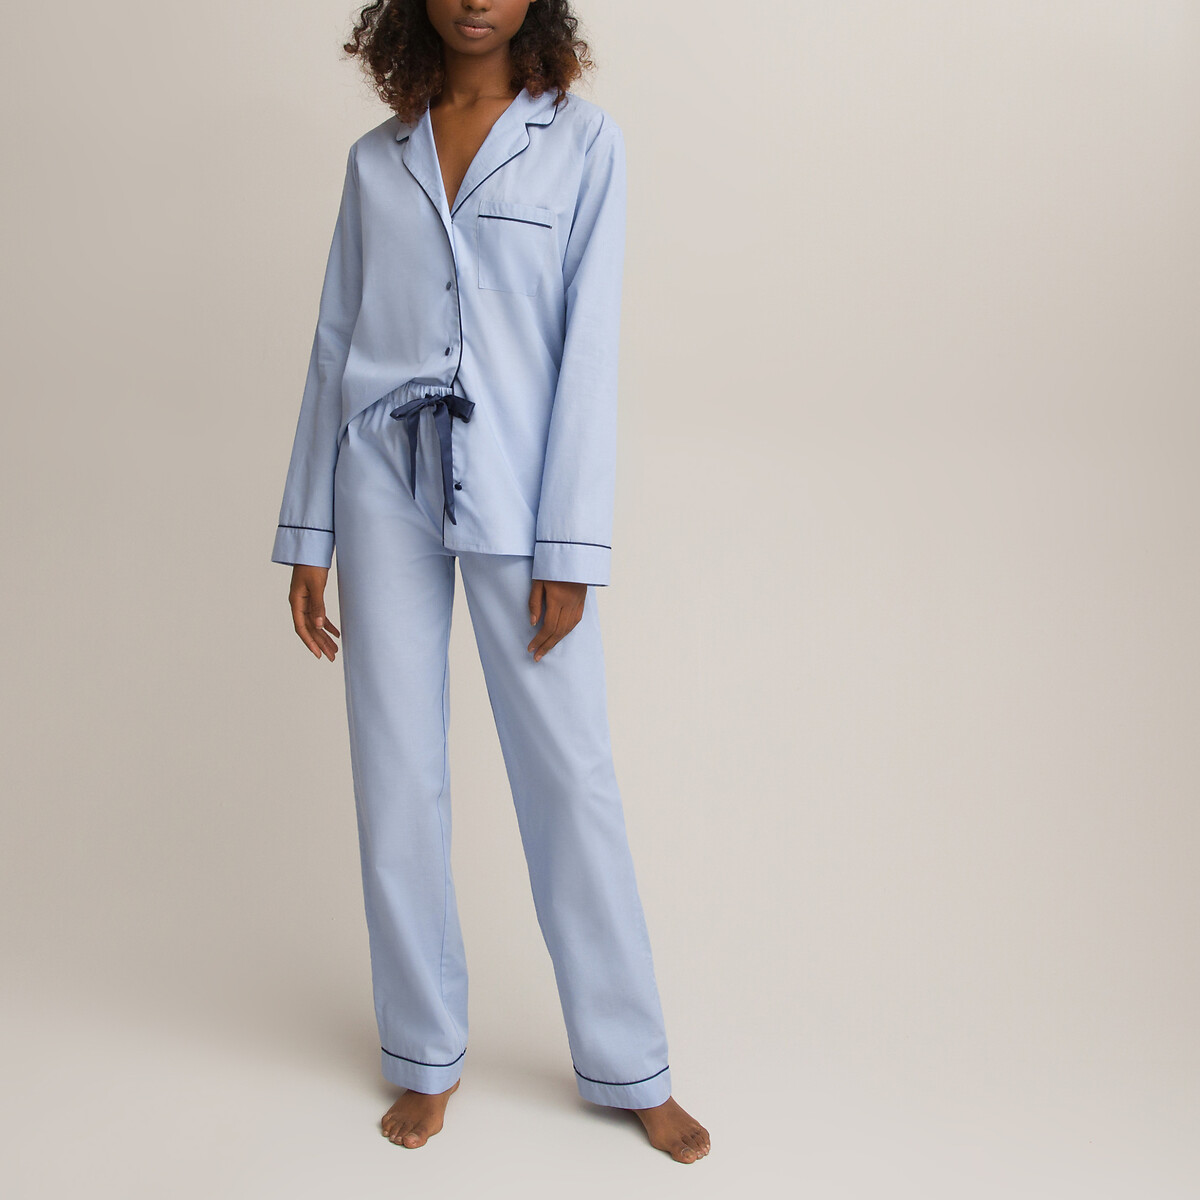 Pijamas de mujer | La